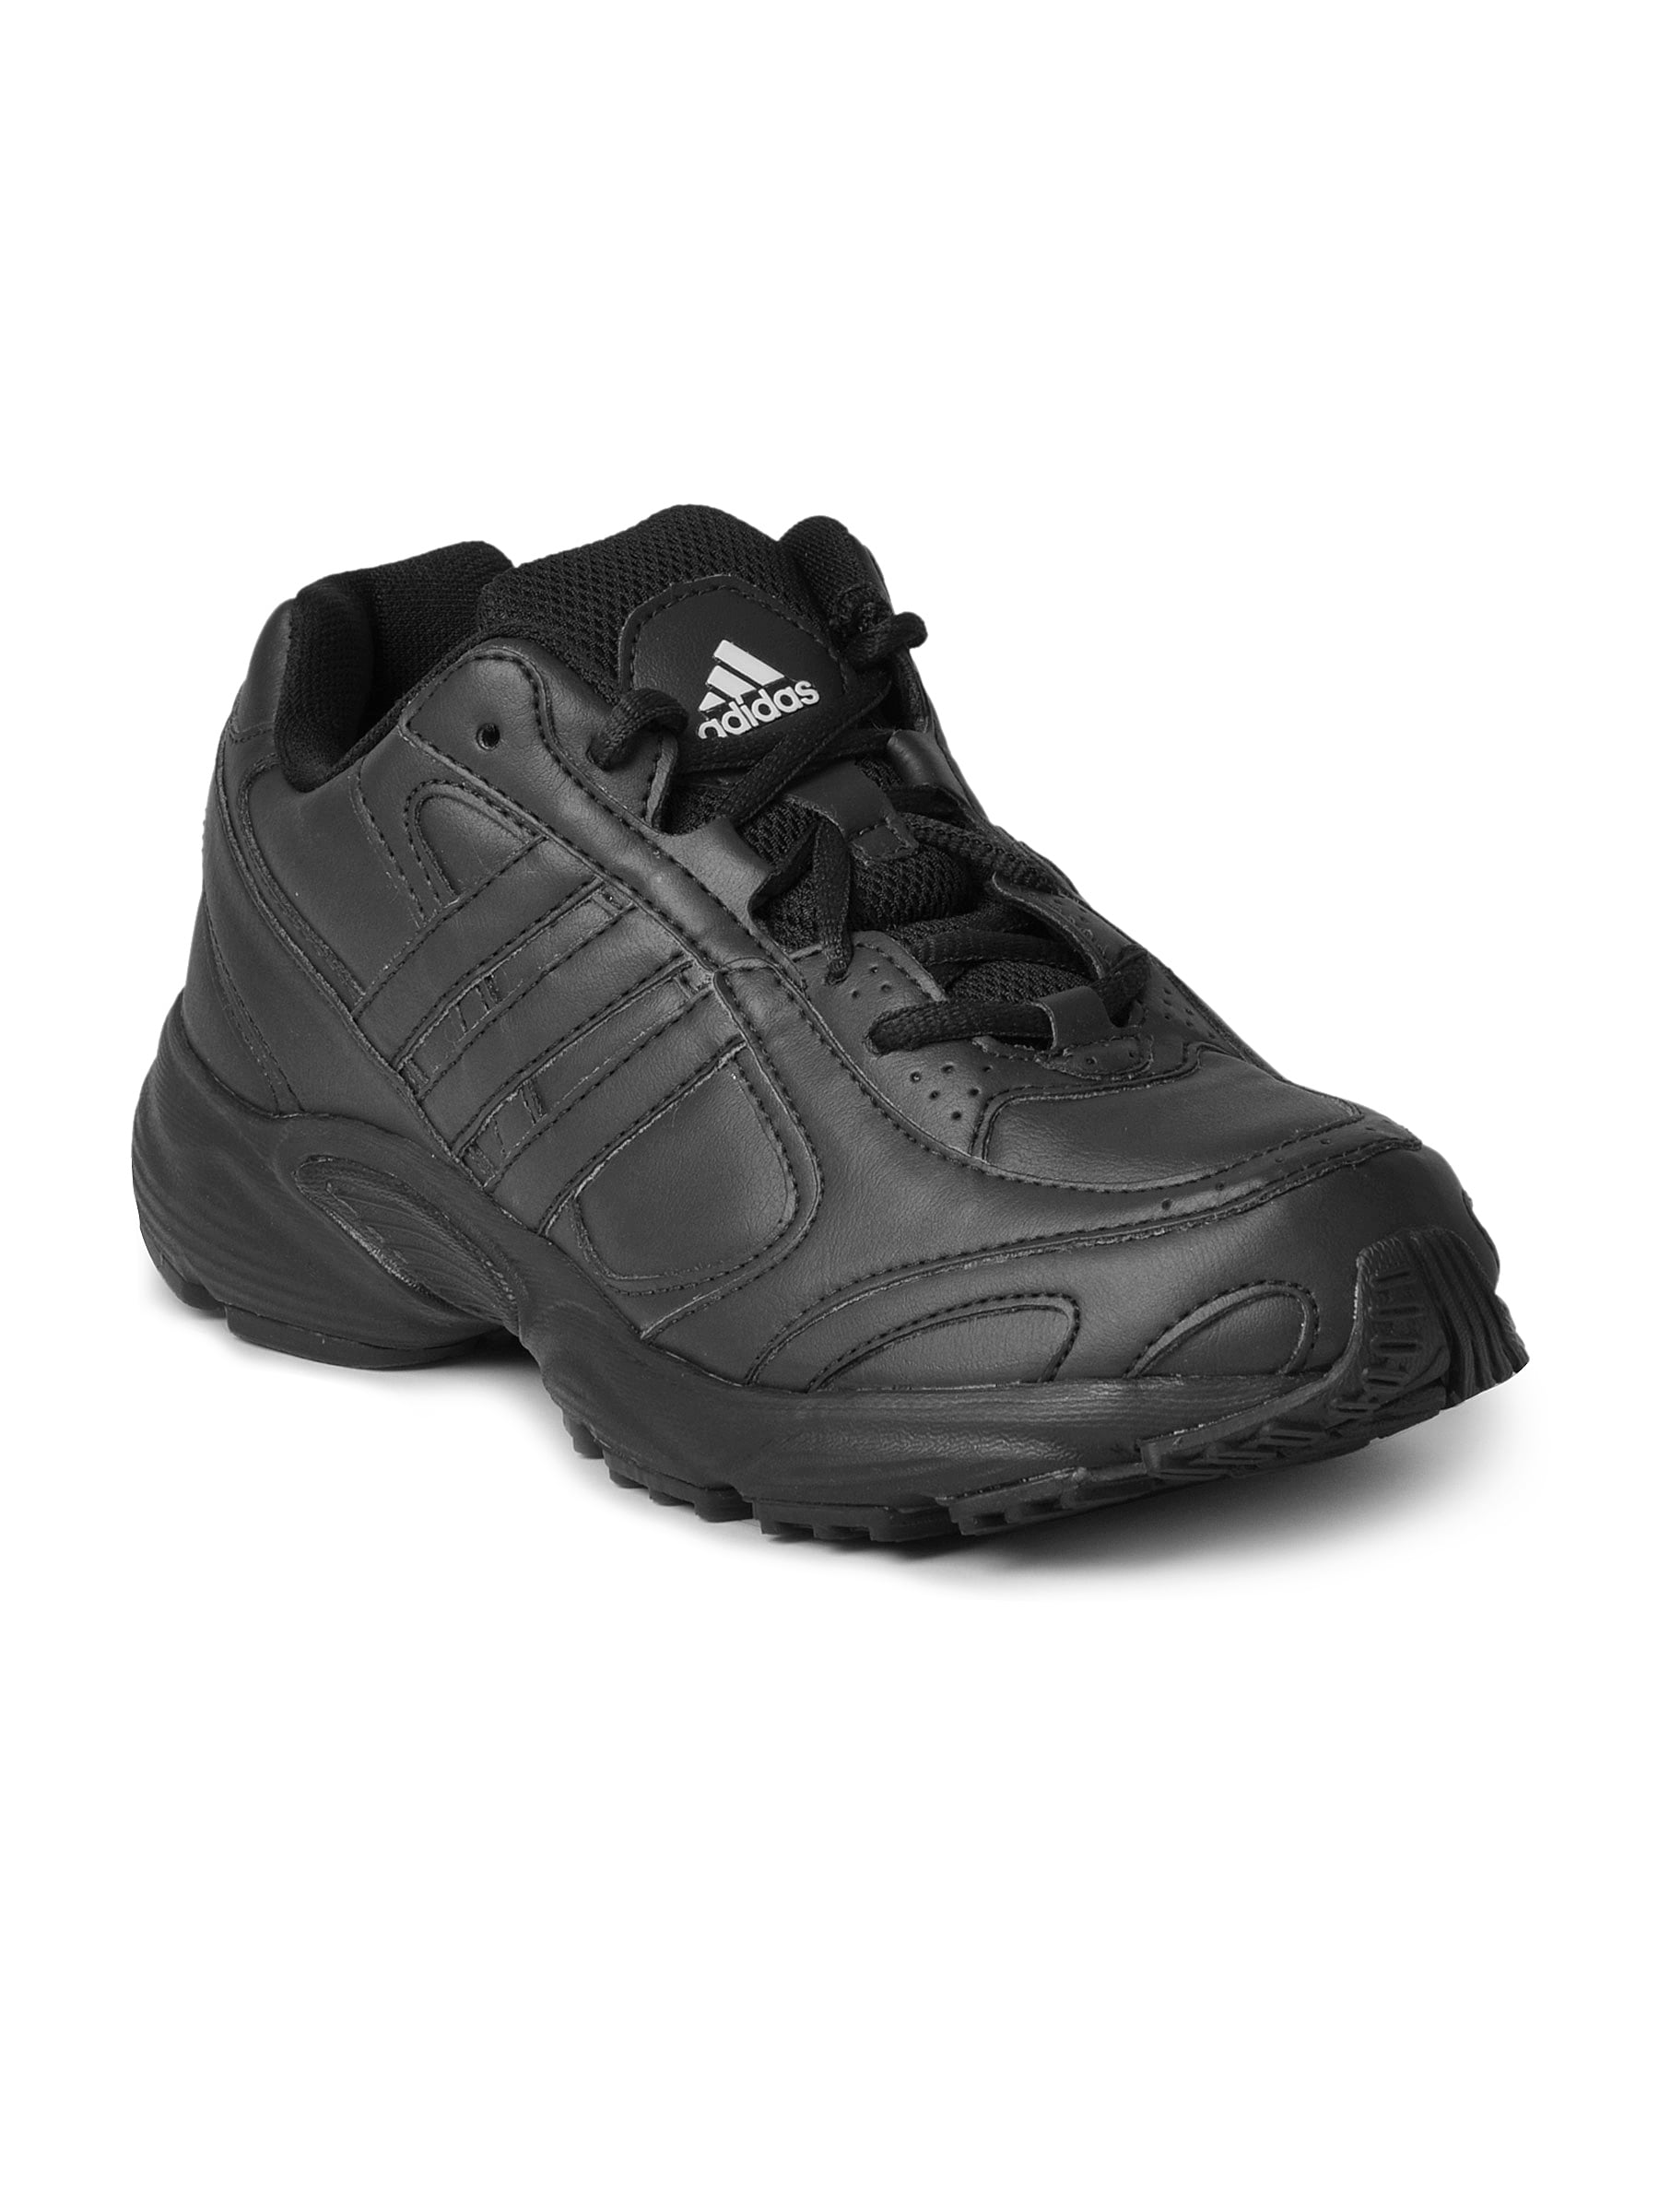 ADIDAS Kids Boys Duramo Synthetic Black Sports Shoes